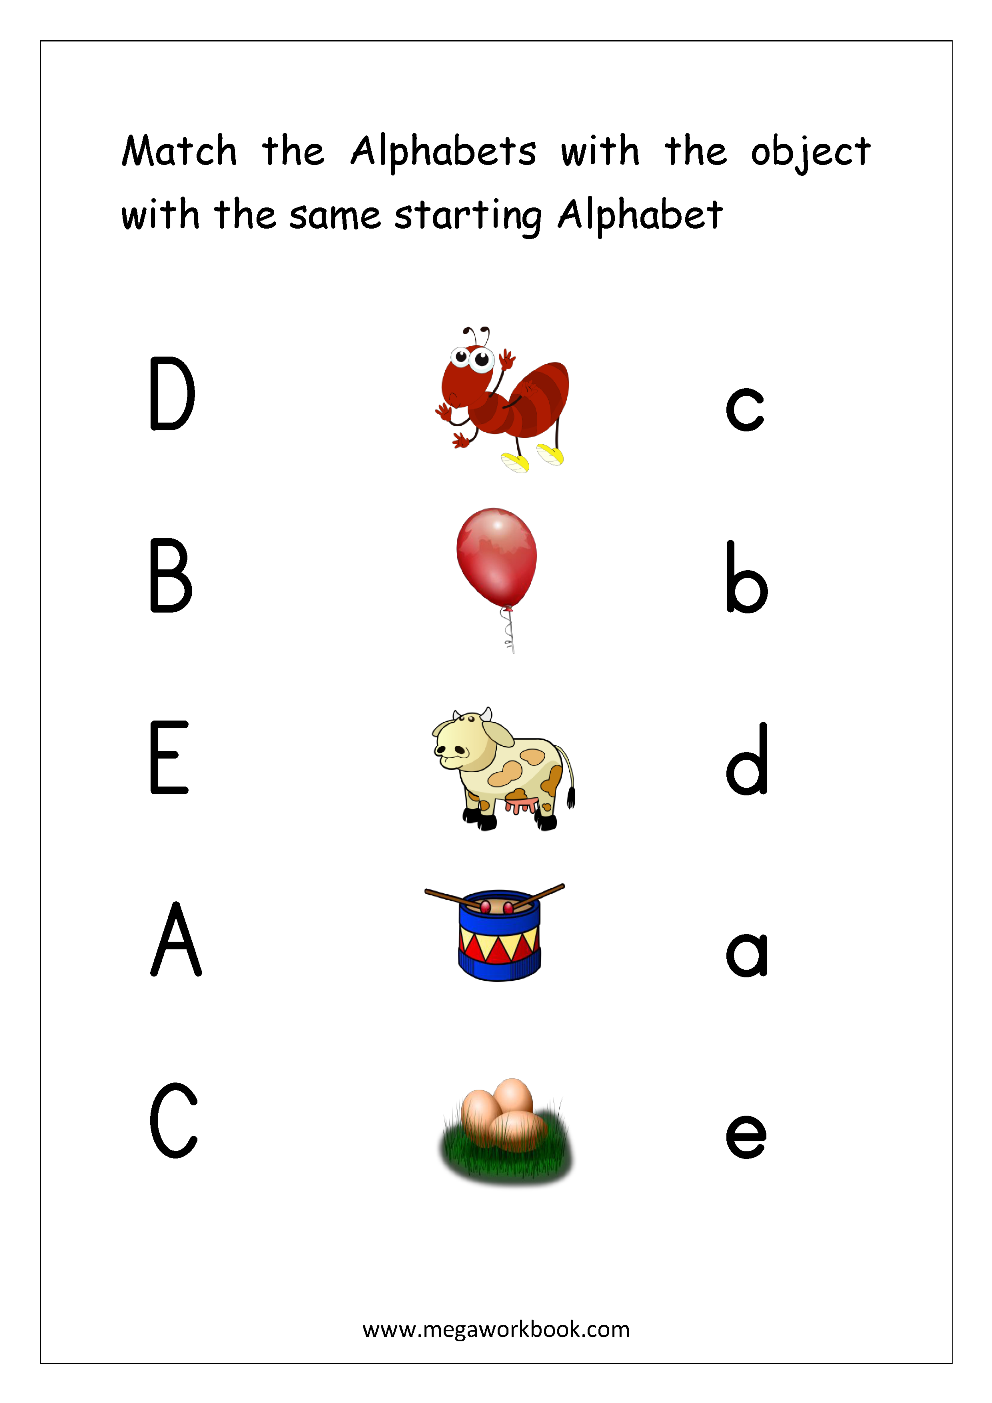 free-english-worksheets-alphabet-matching-megaworkbook